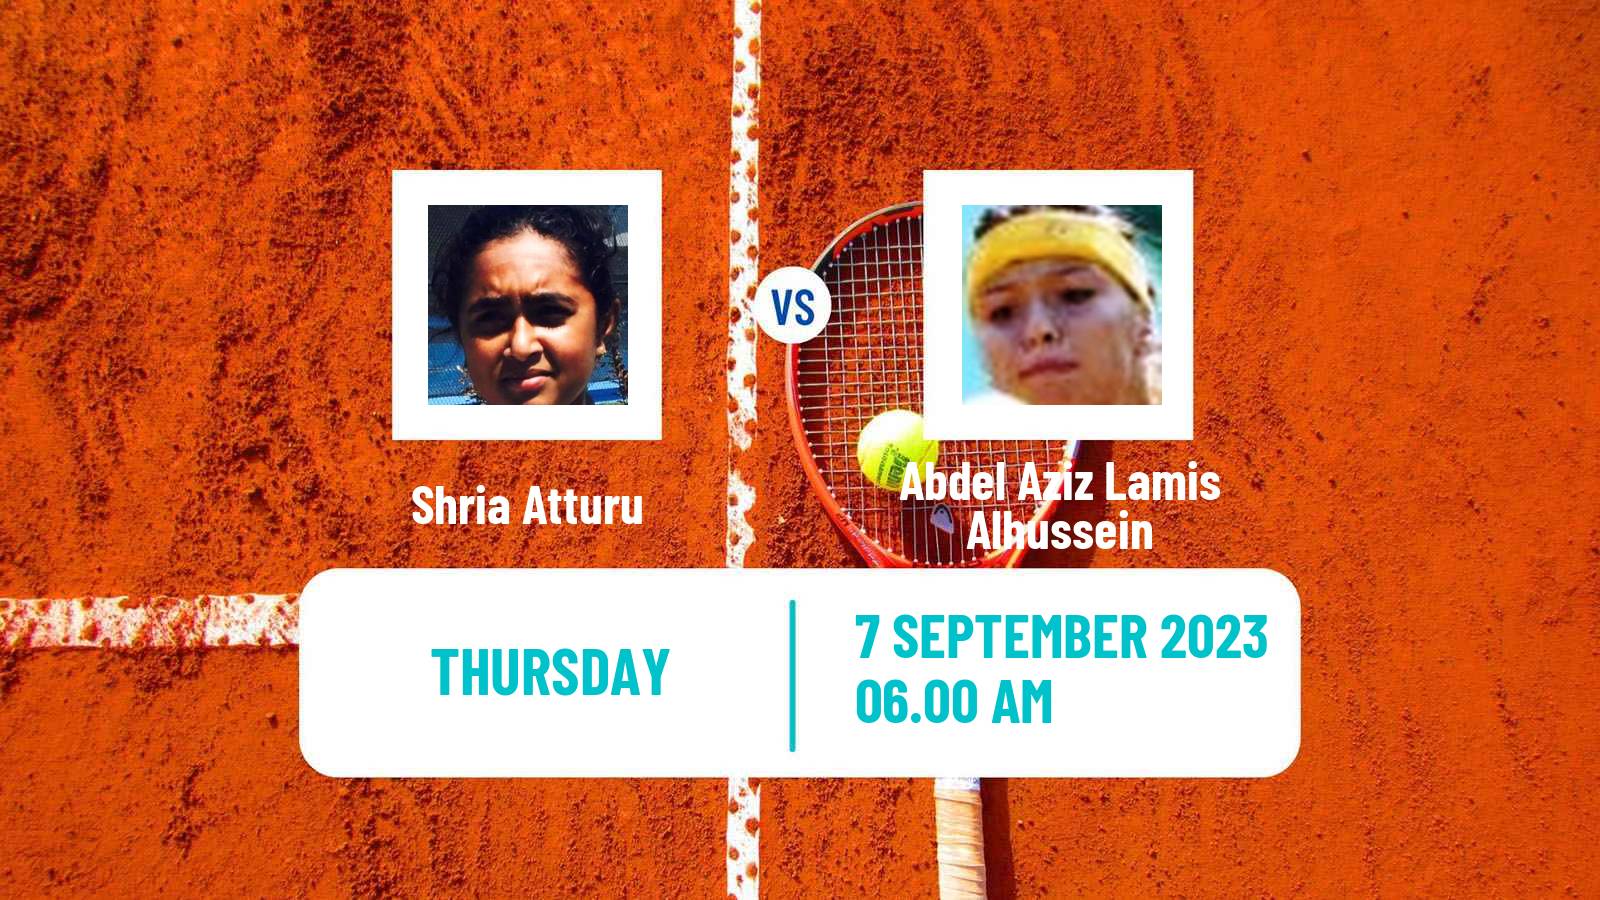 Tennis ITF W15 Monastir 31 Women Shria Atturu - Abdel Aziz Lamis Alhussein